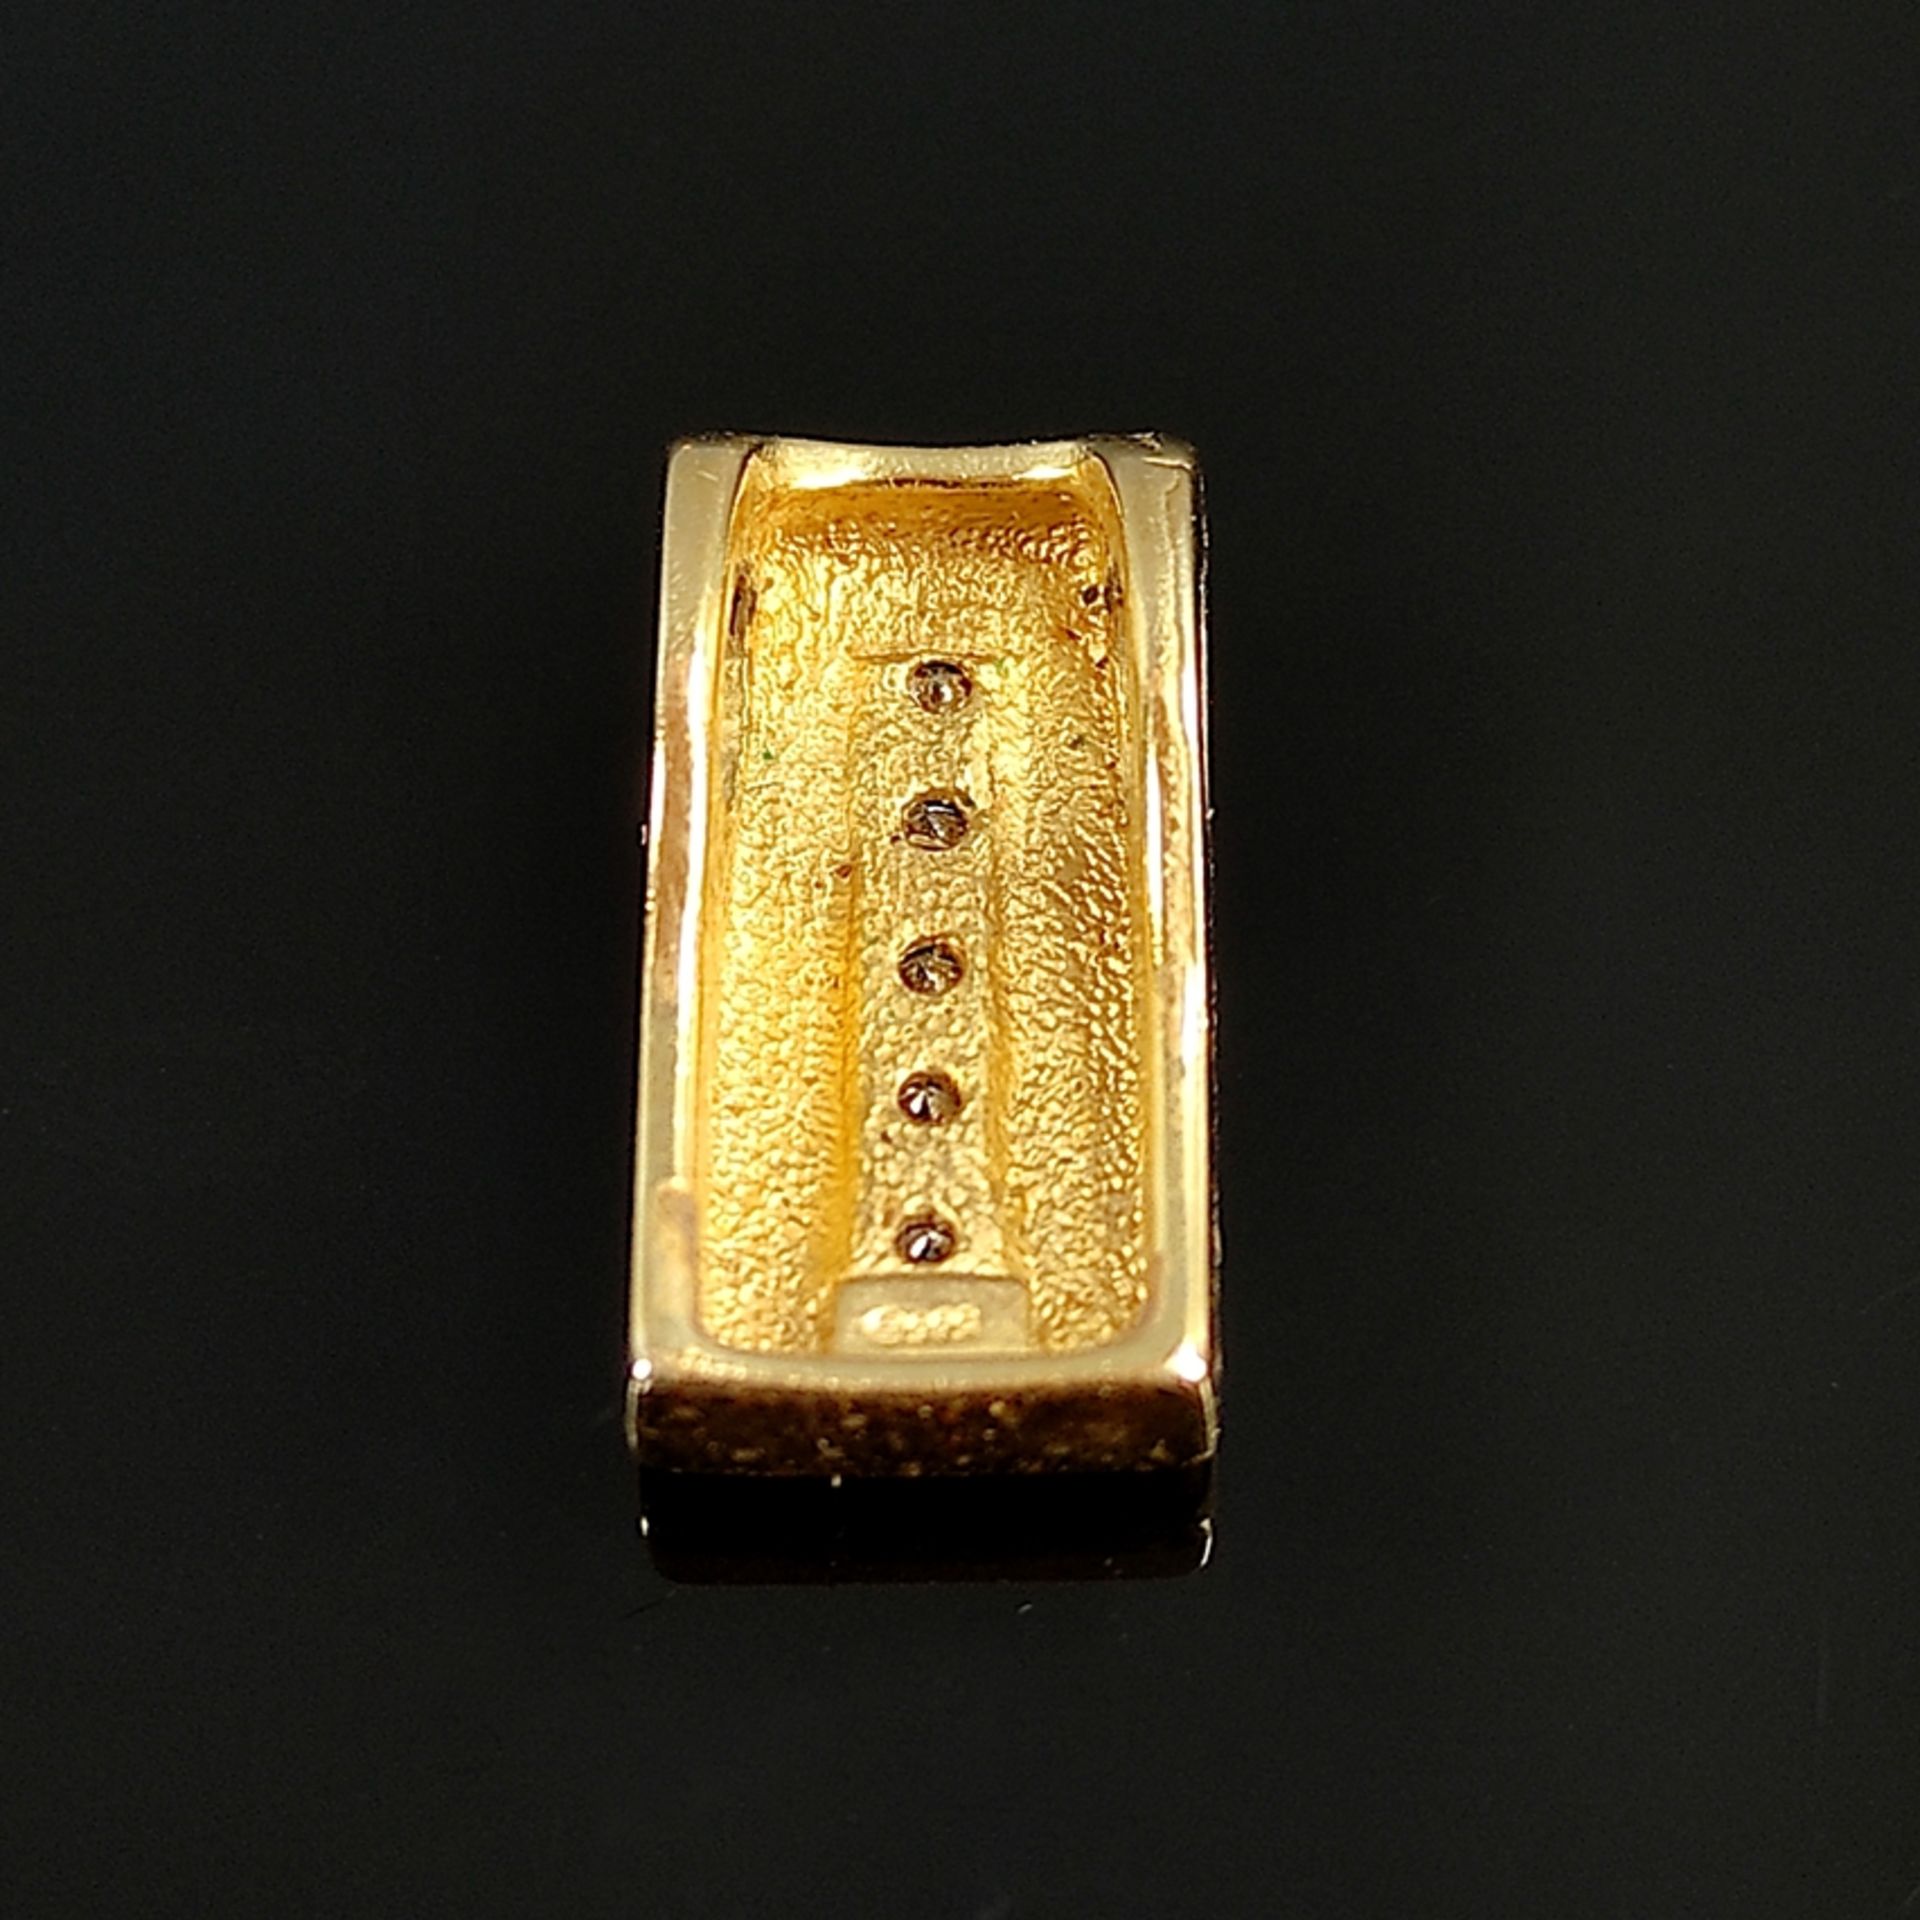 Modern gold diamond pendant, 585/14K, 2,9g, set with 5 small diamonds, rhodium-plated settings, gol - Image 3 of 4